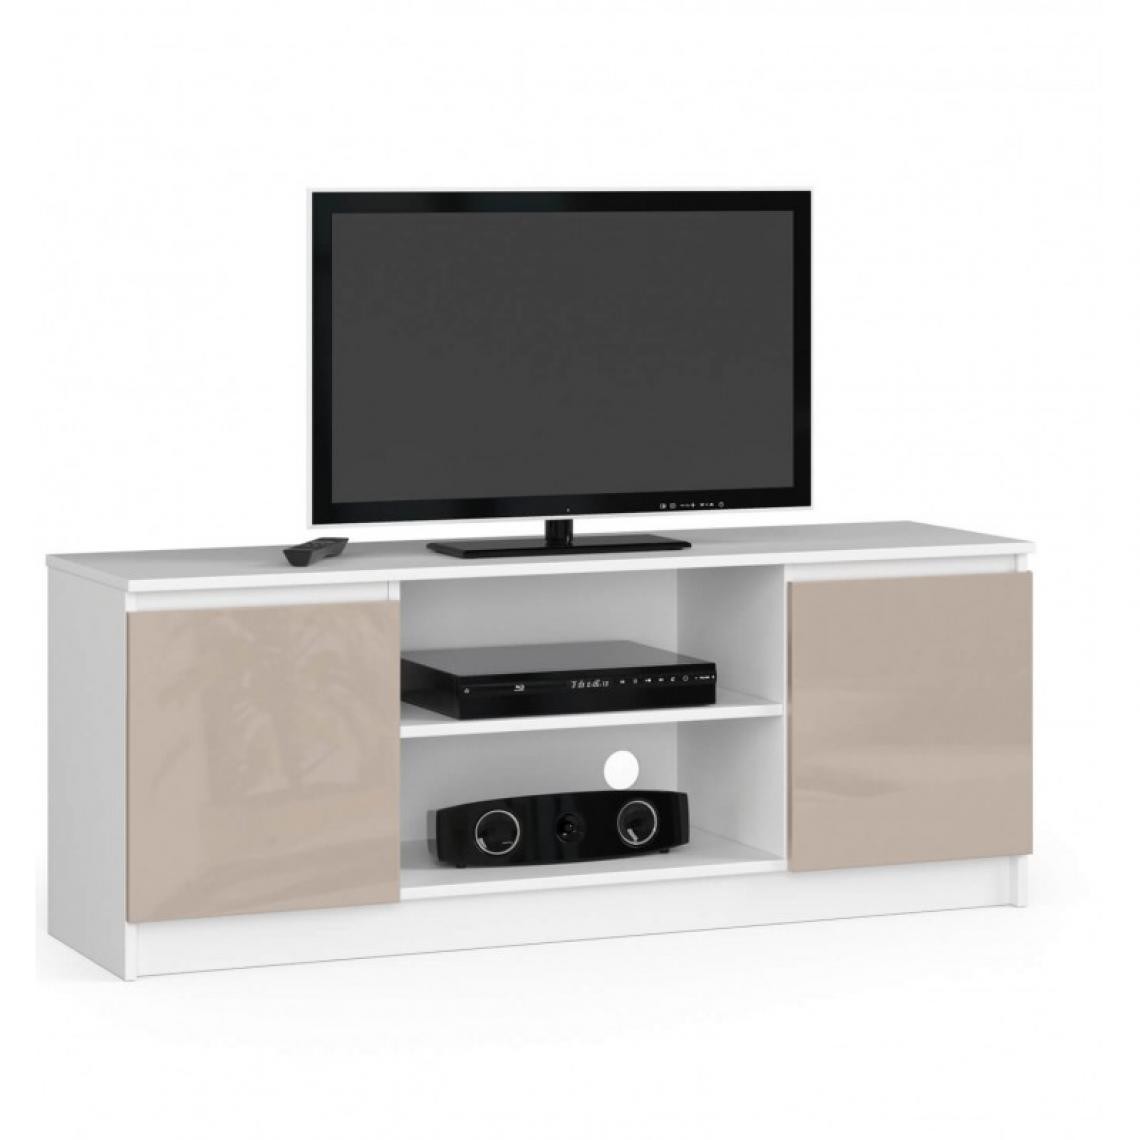 Hucoco - DUSK - Meuble TV style moderne salon - 140x55x40 - 2 portes+2 tablettes - Multimédia - Beige - Meubles TV, Hi-Fi